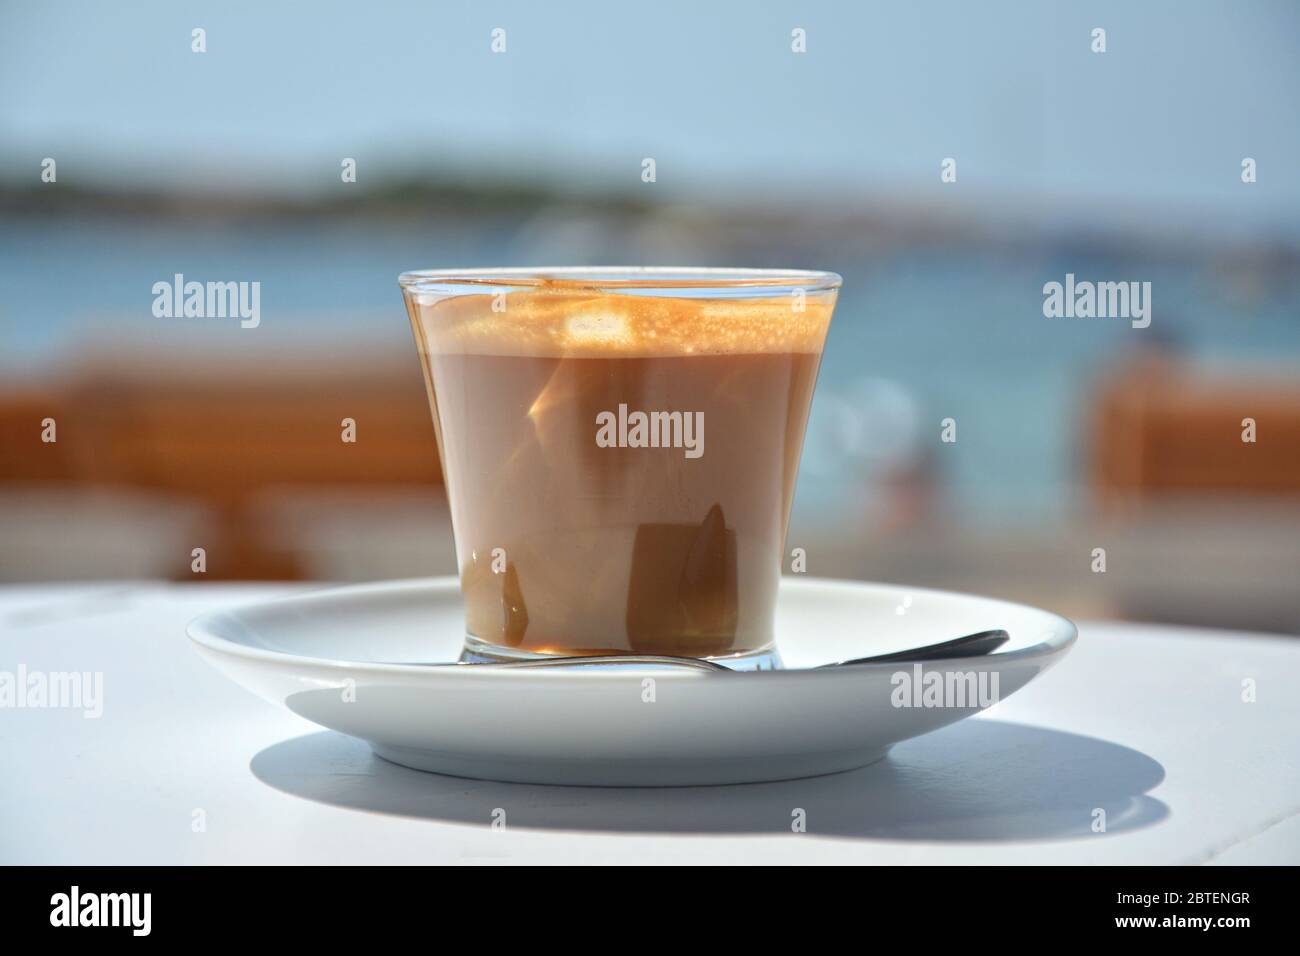 Espresso macchiato hi-res stock photography and images - Alamy